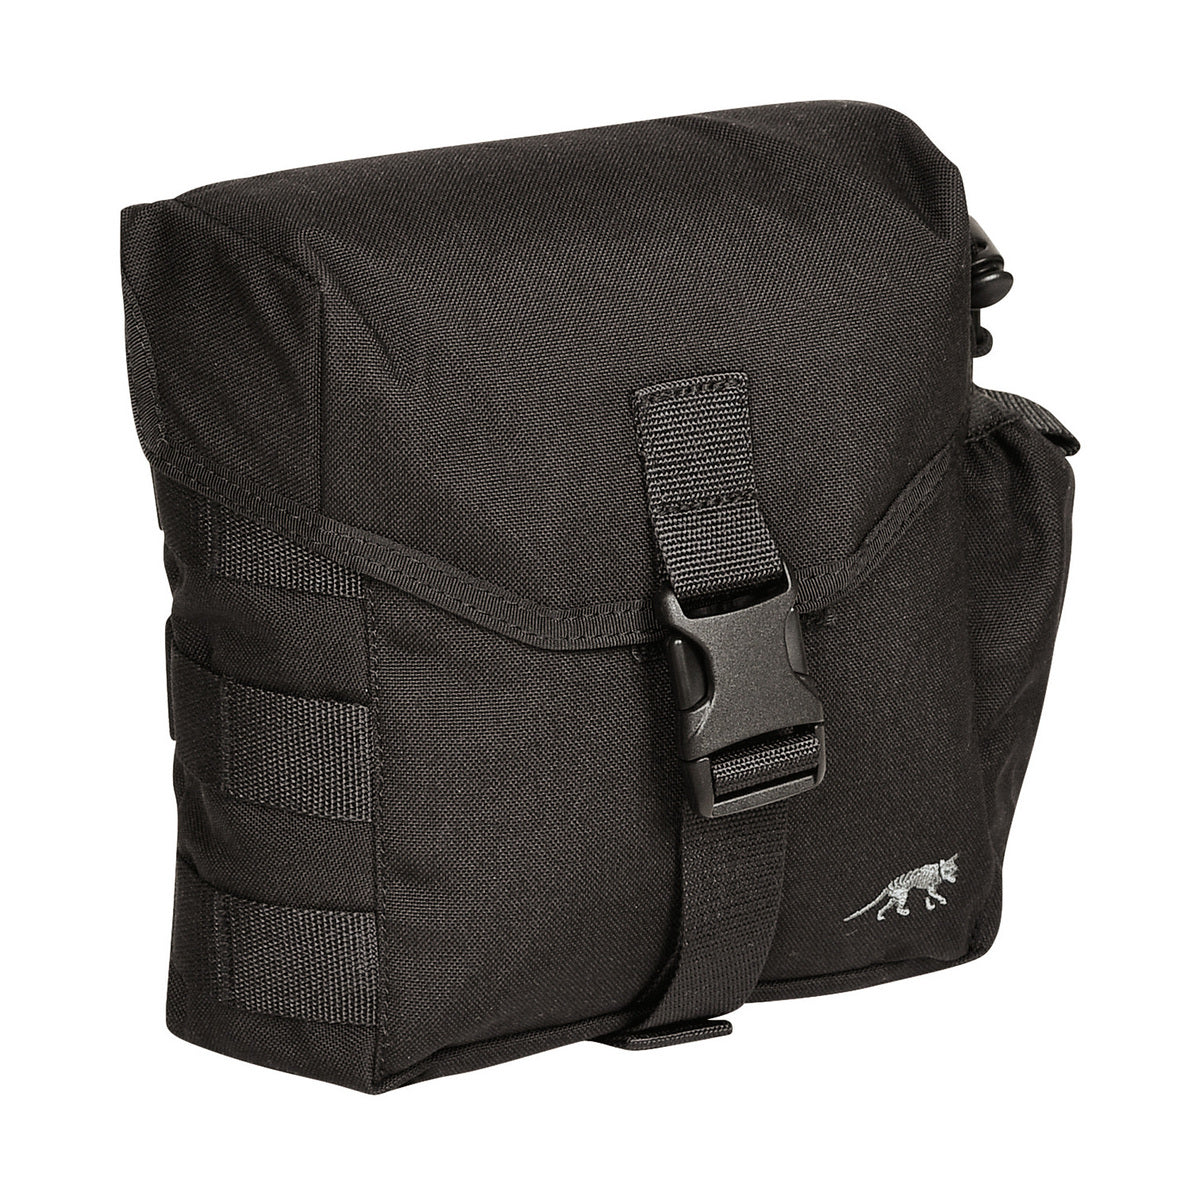 Tasmanian Tiger Canteen Pouch MKII Accessory Bag Tactical Gear Australia Supplier Distributor Dealer